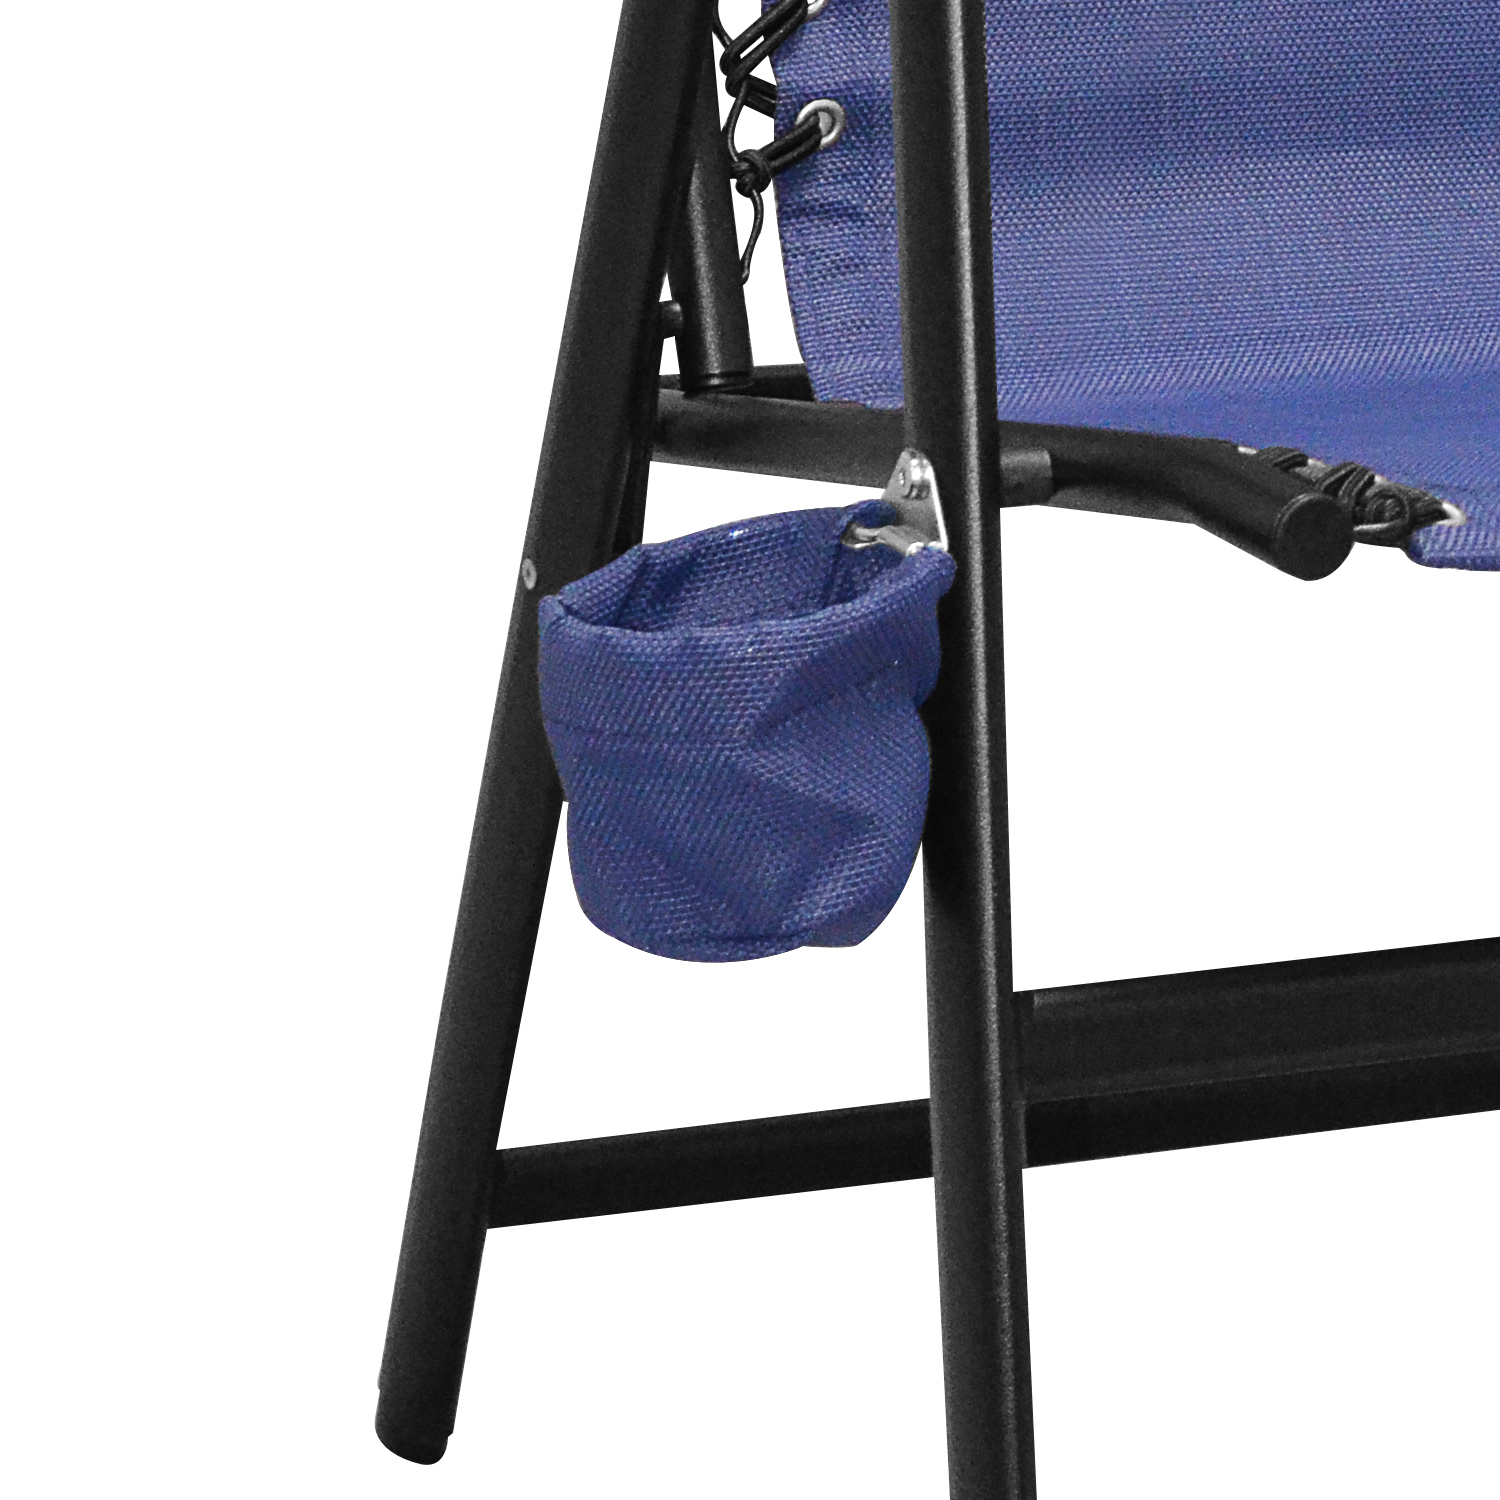 Caravan Sports XL Suspension Chair, Blue - image 4 of 5